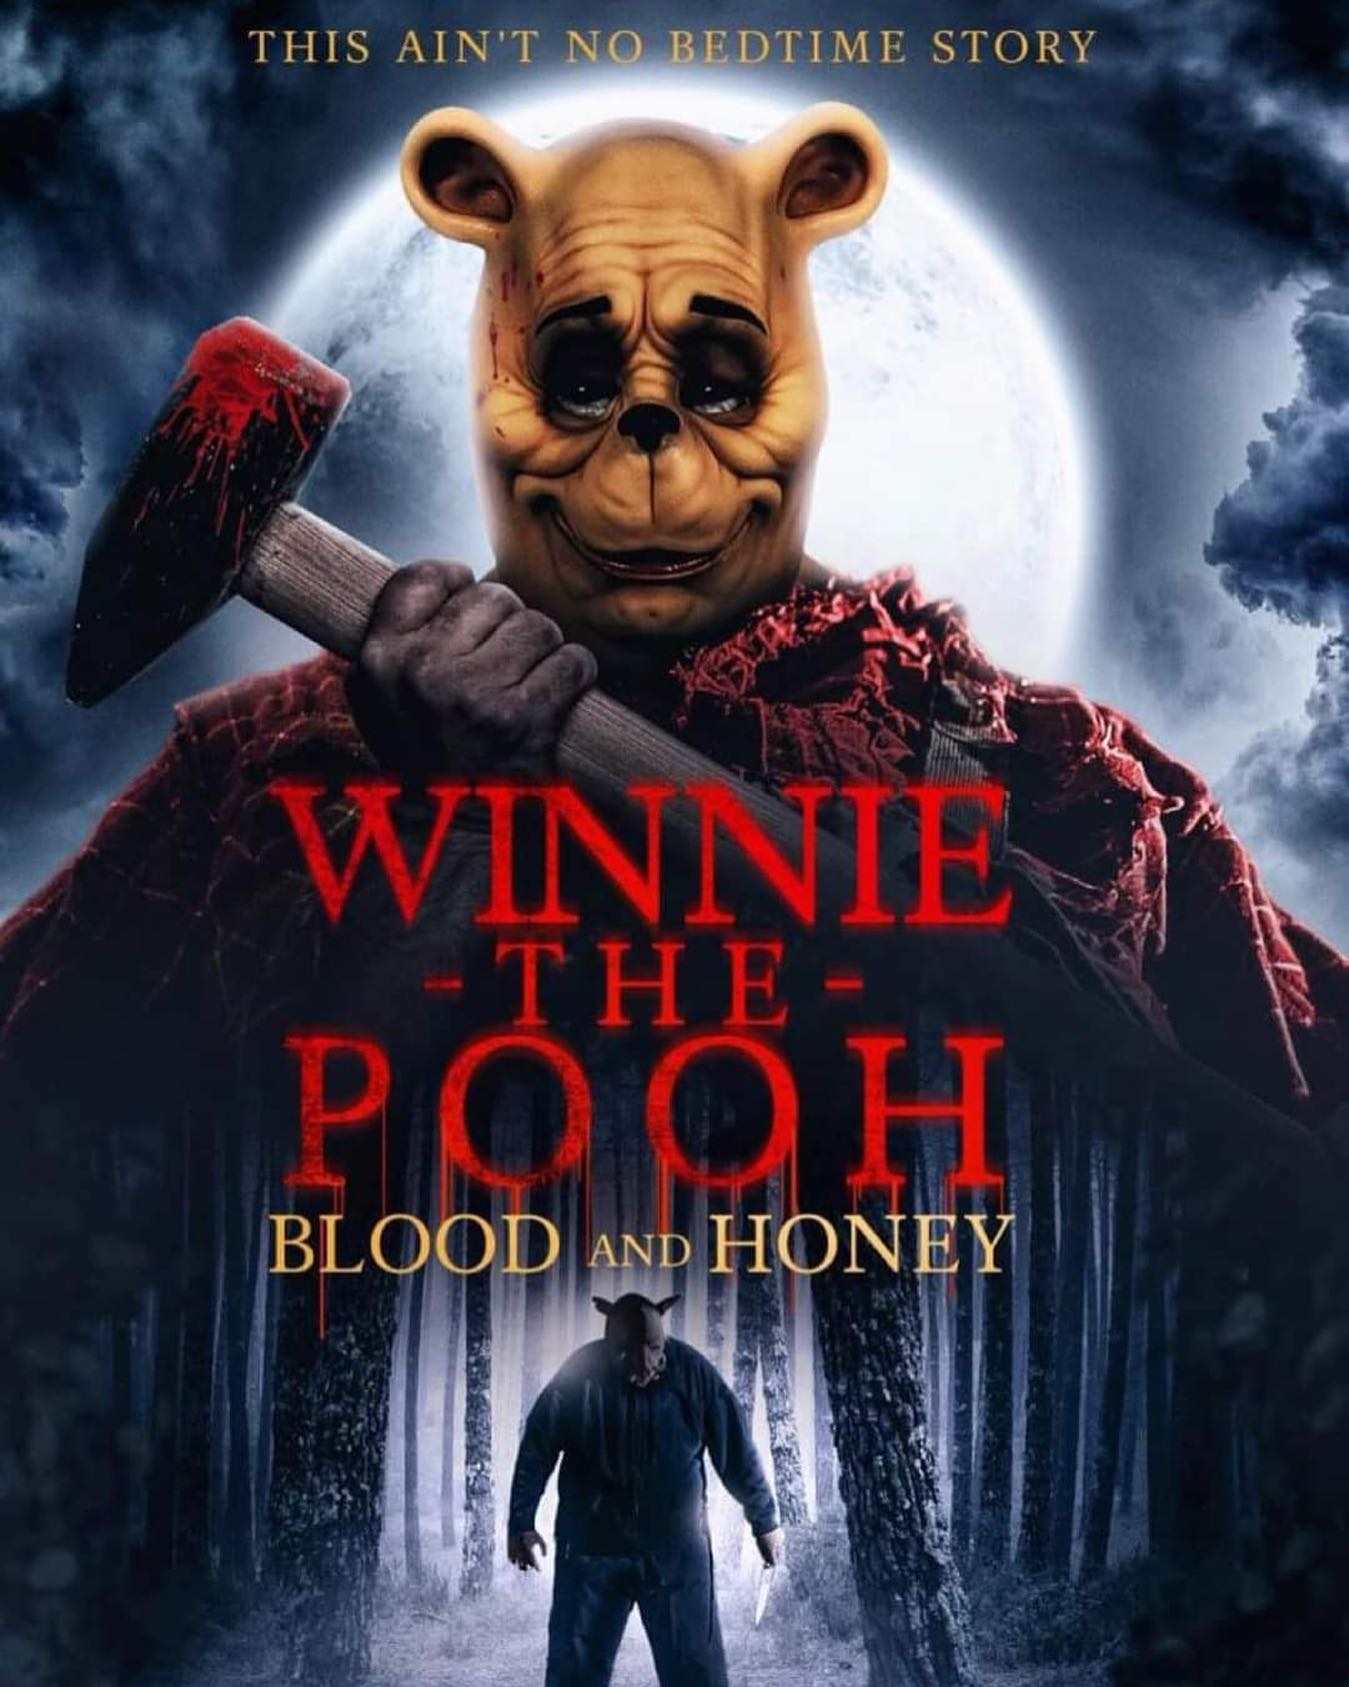 Official poster has been released! What does everyone think? 

#winniethepooh #winnie #winnie #winniethepoohbloodandhoney